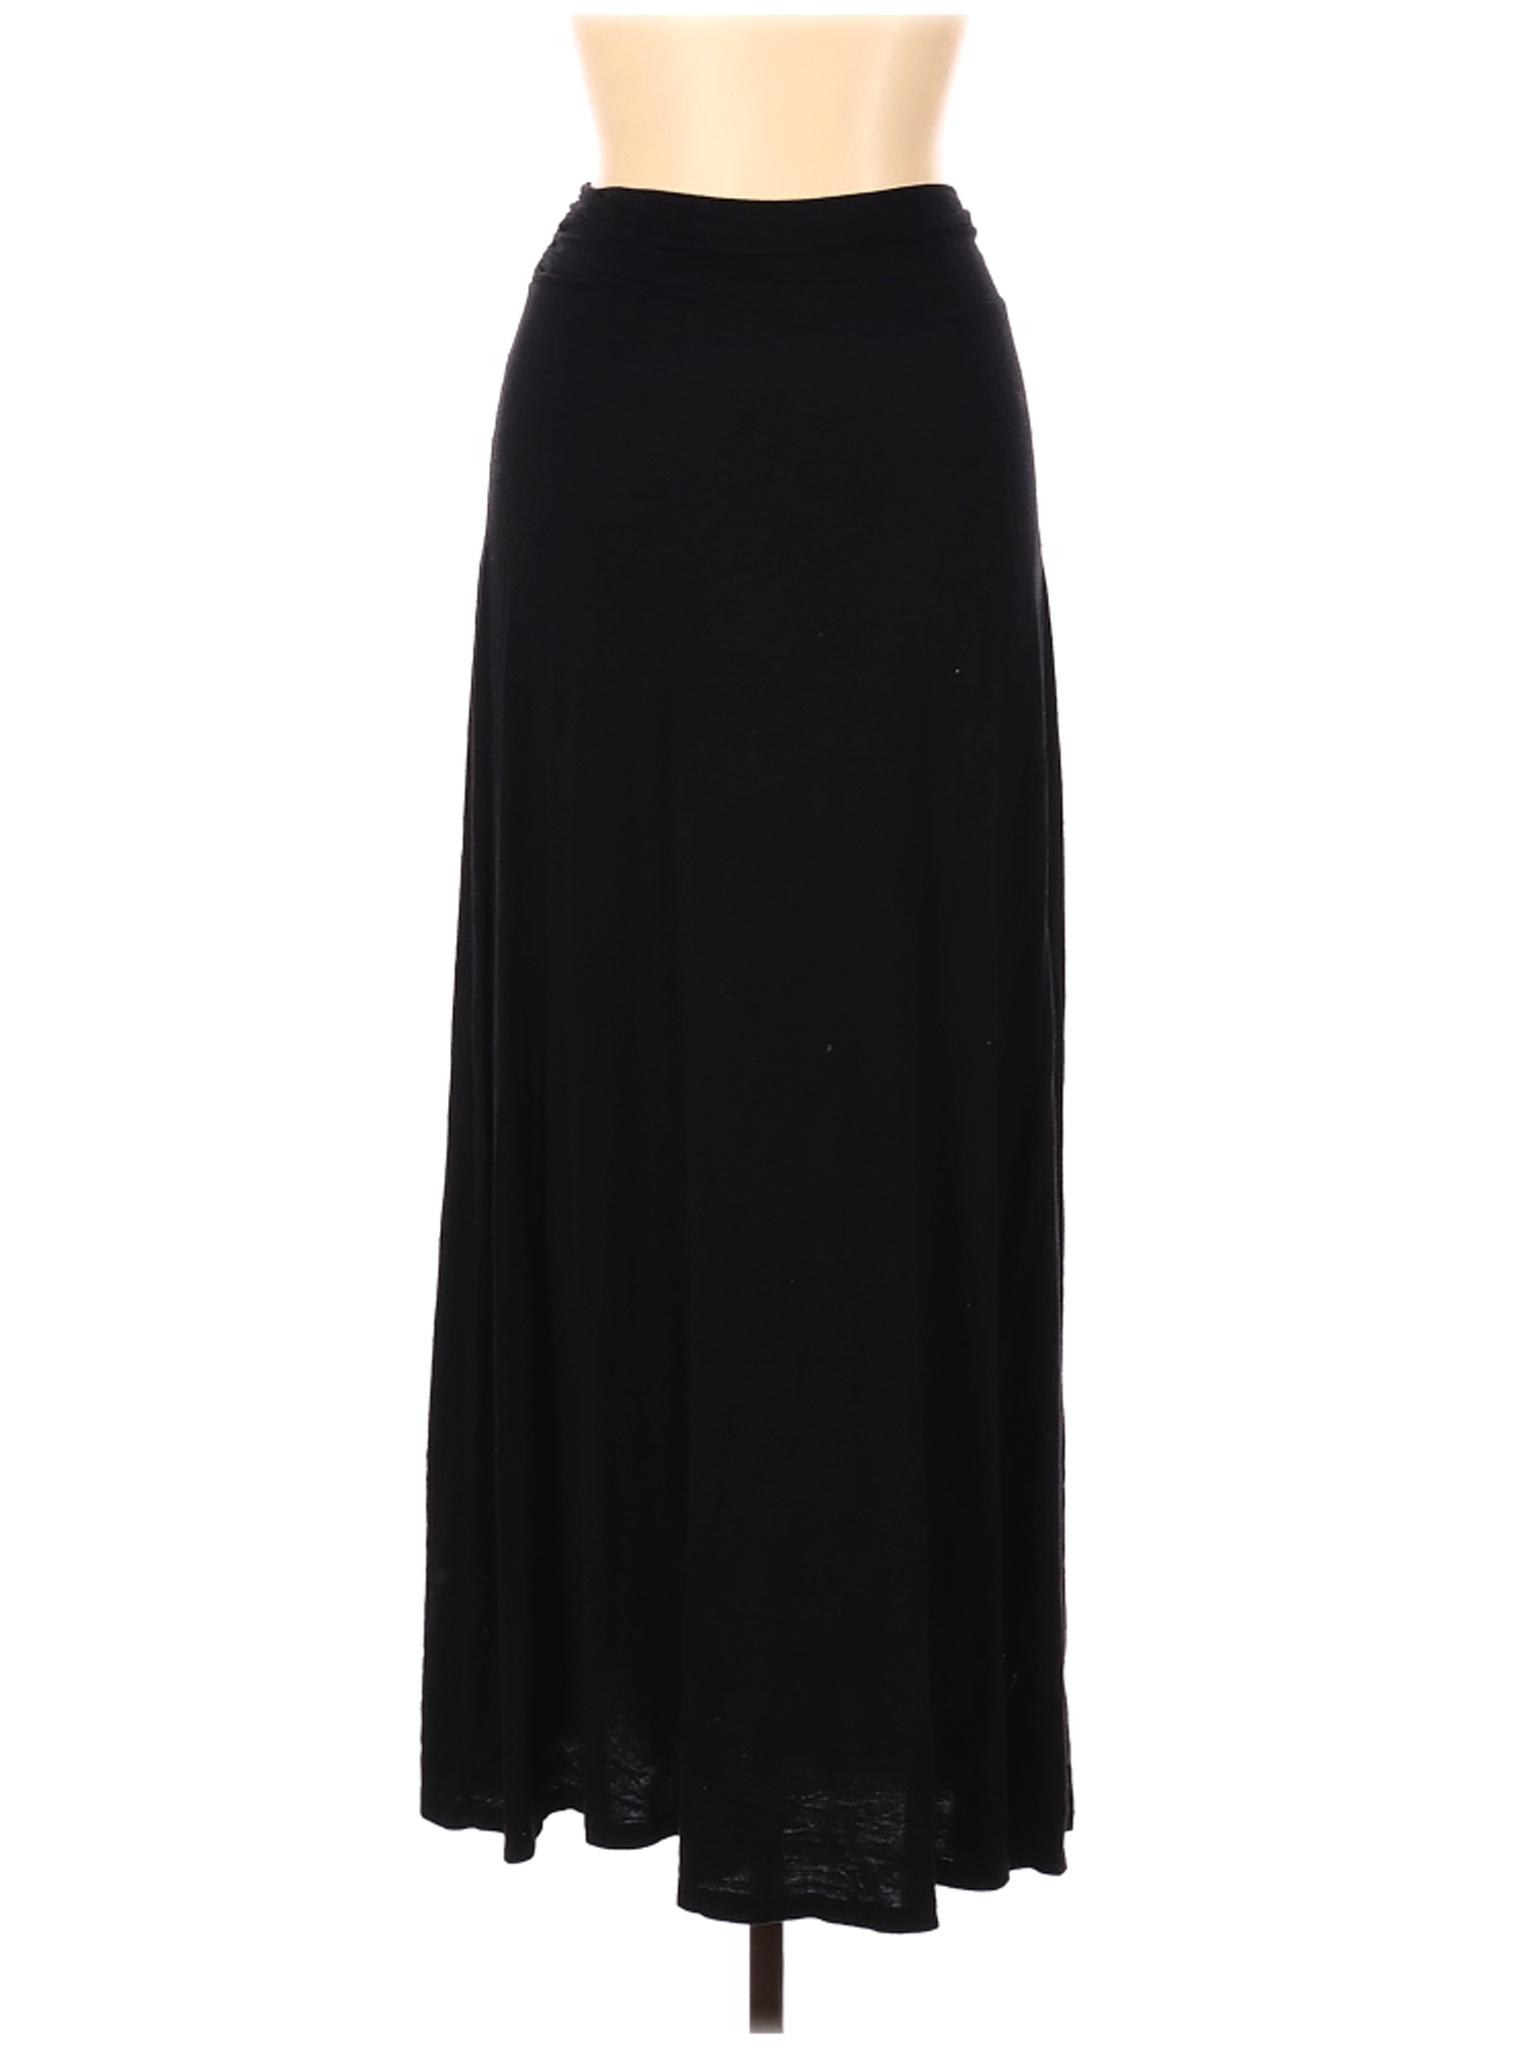 Merona Women Black Casual Skirt L | eBay